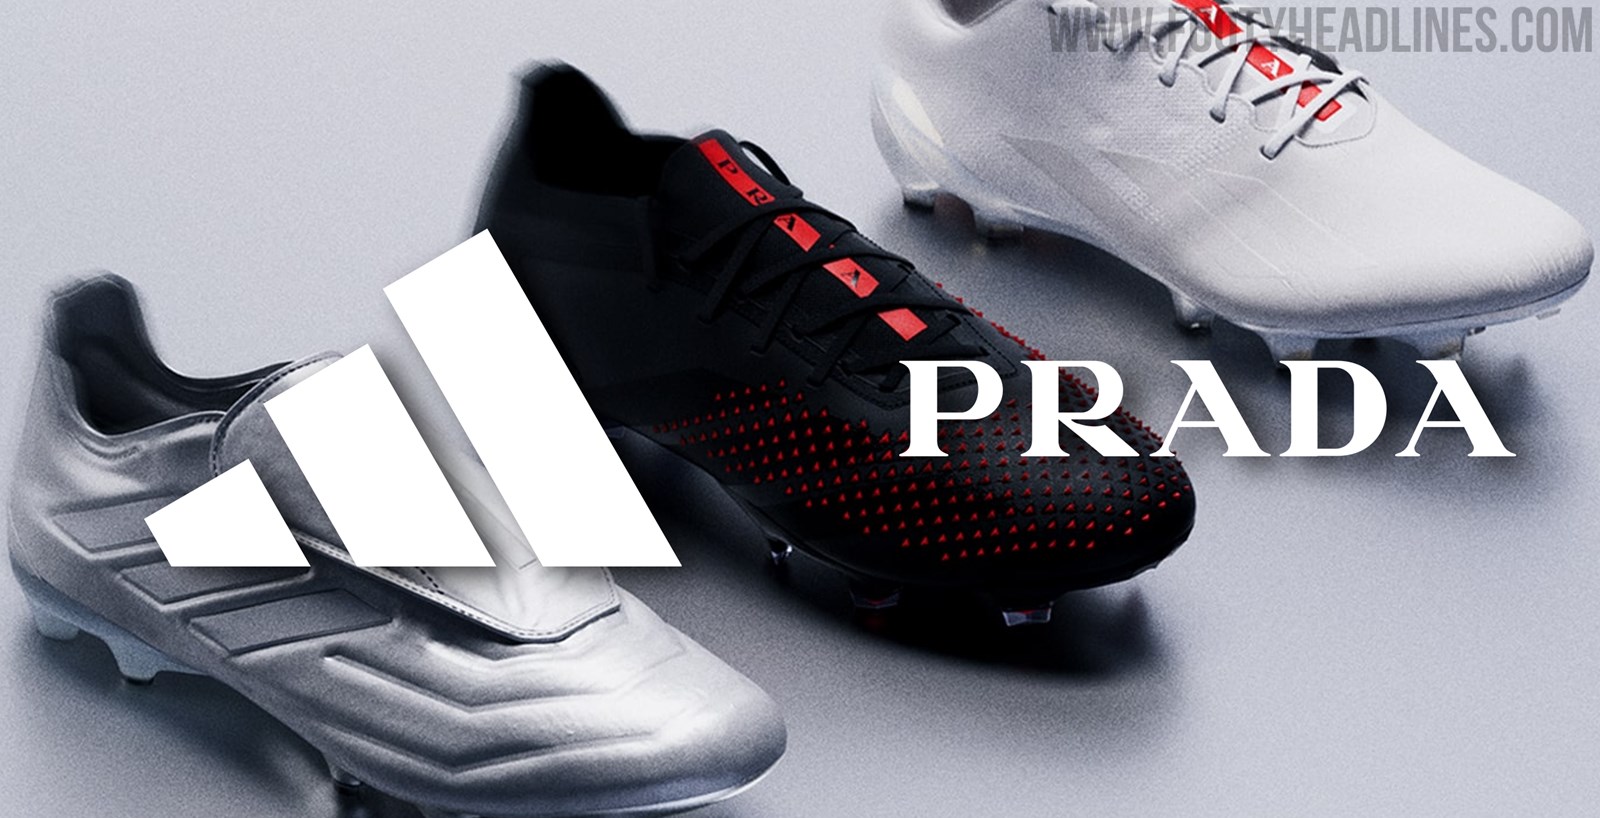 Adidas, Prada Launch World's First Cooperative Football Boot